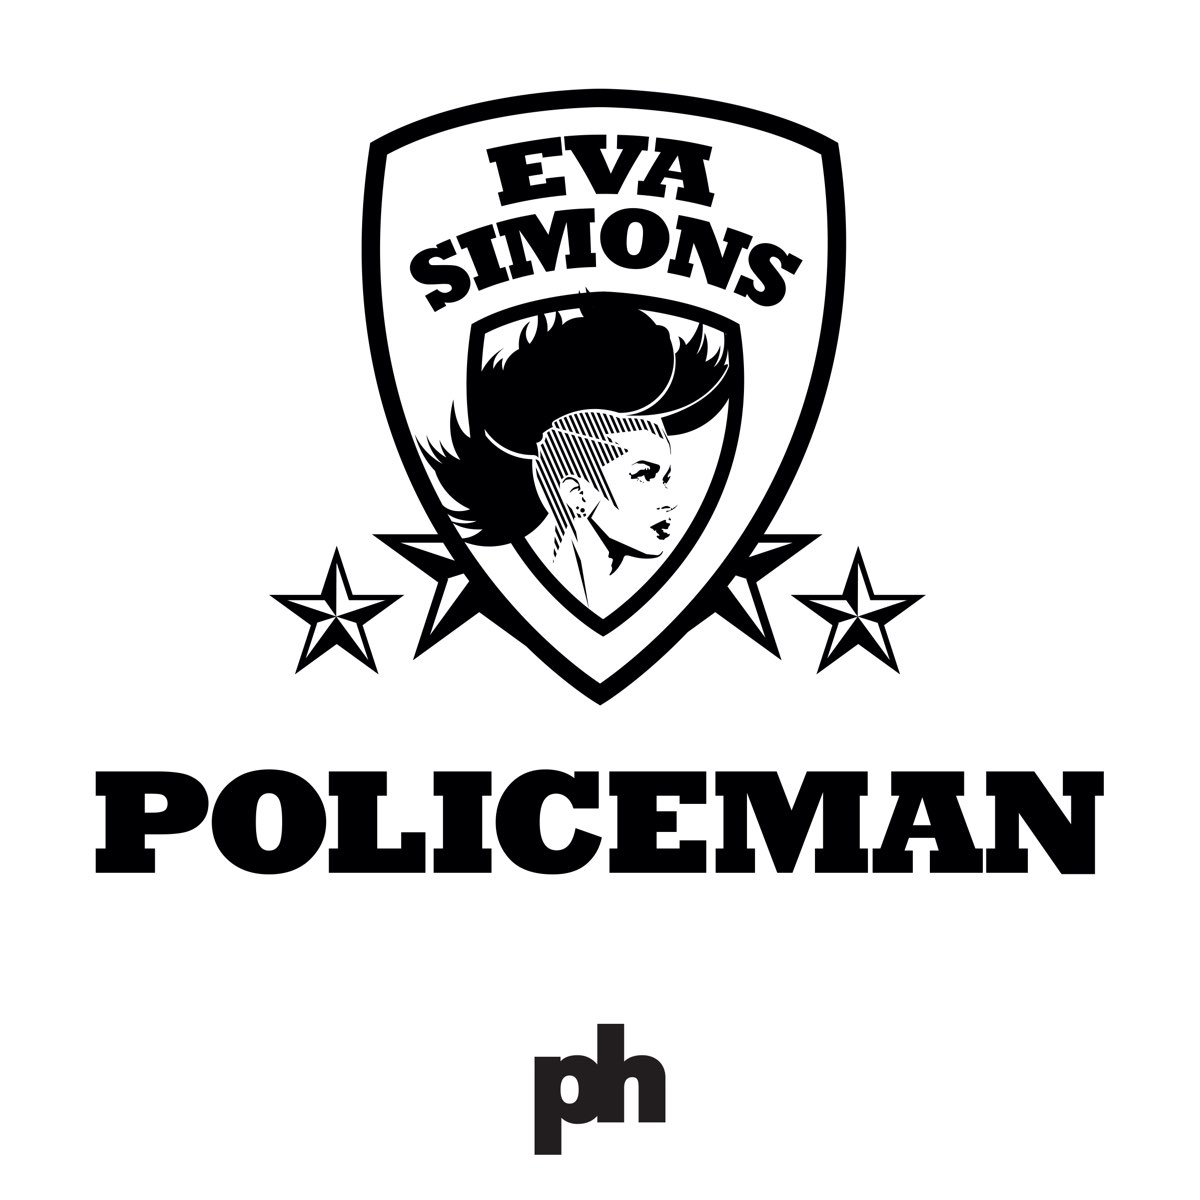 Eva Simons ft. featuring Konshens Policeman cover artwork